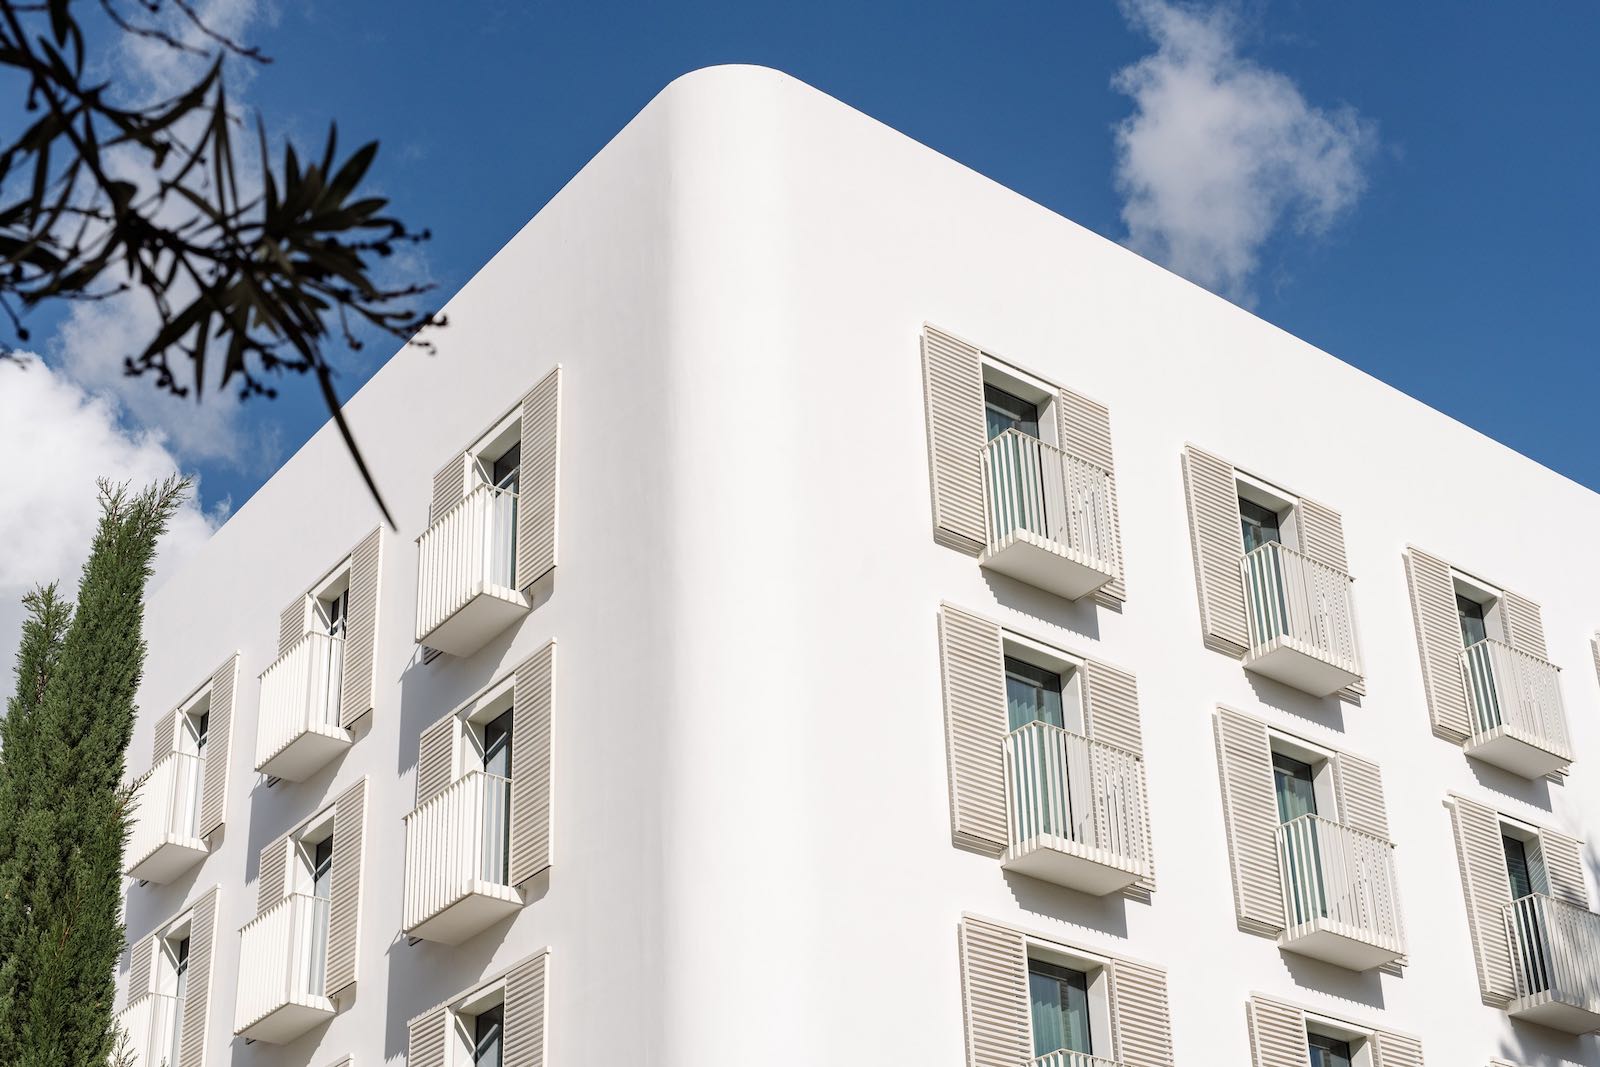 White Ibiza Boutique Hotels Guide: The Standard, ibiza